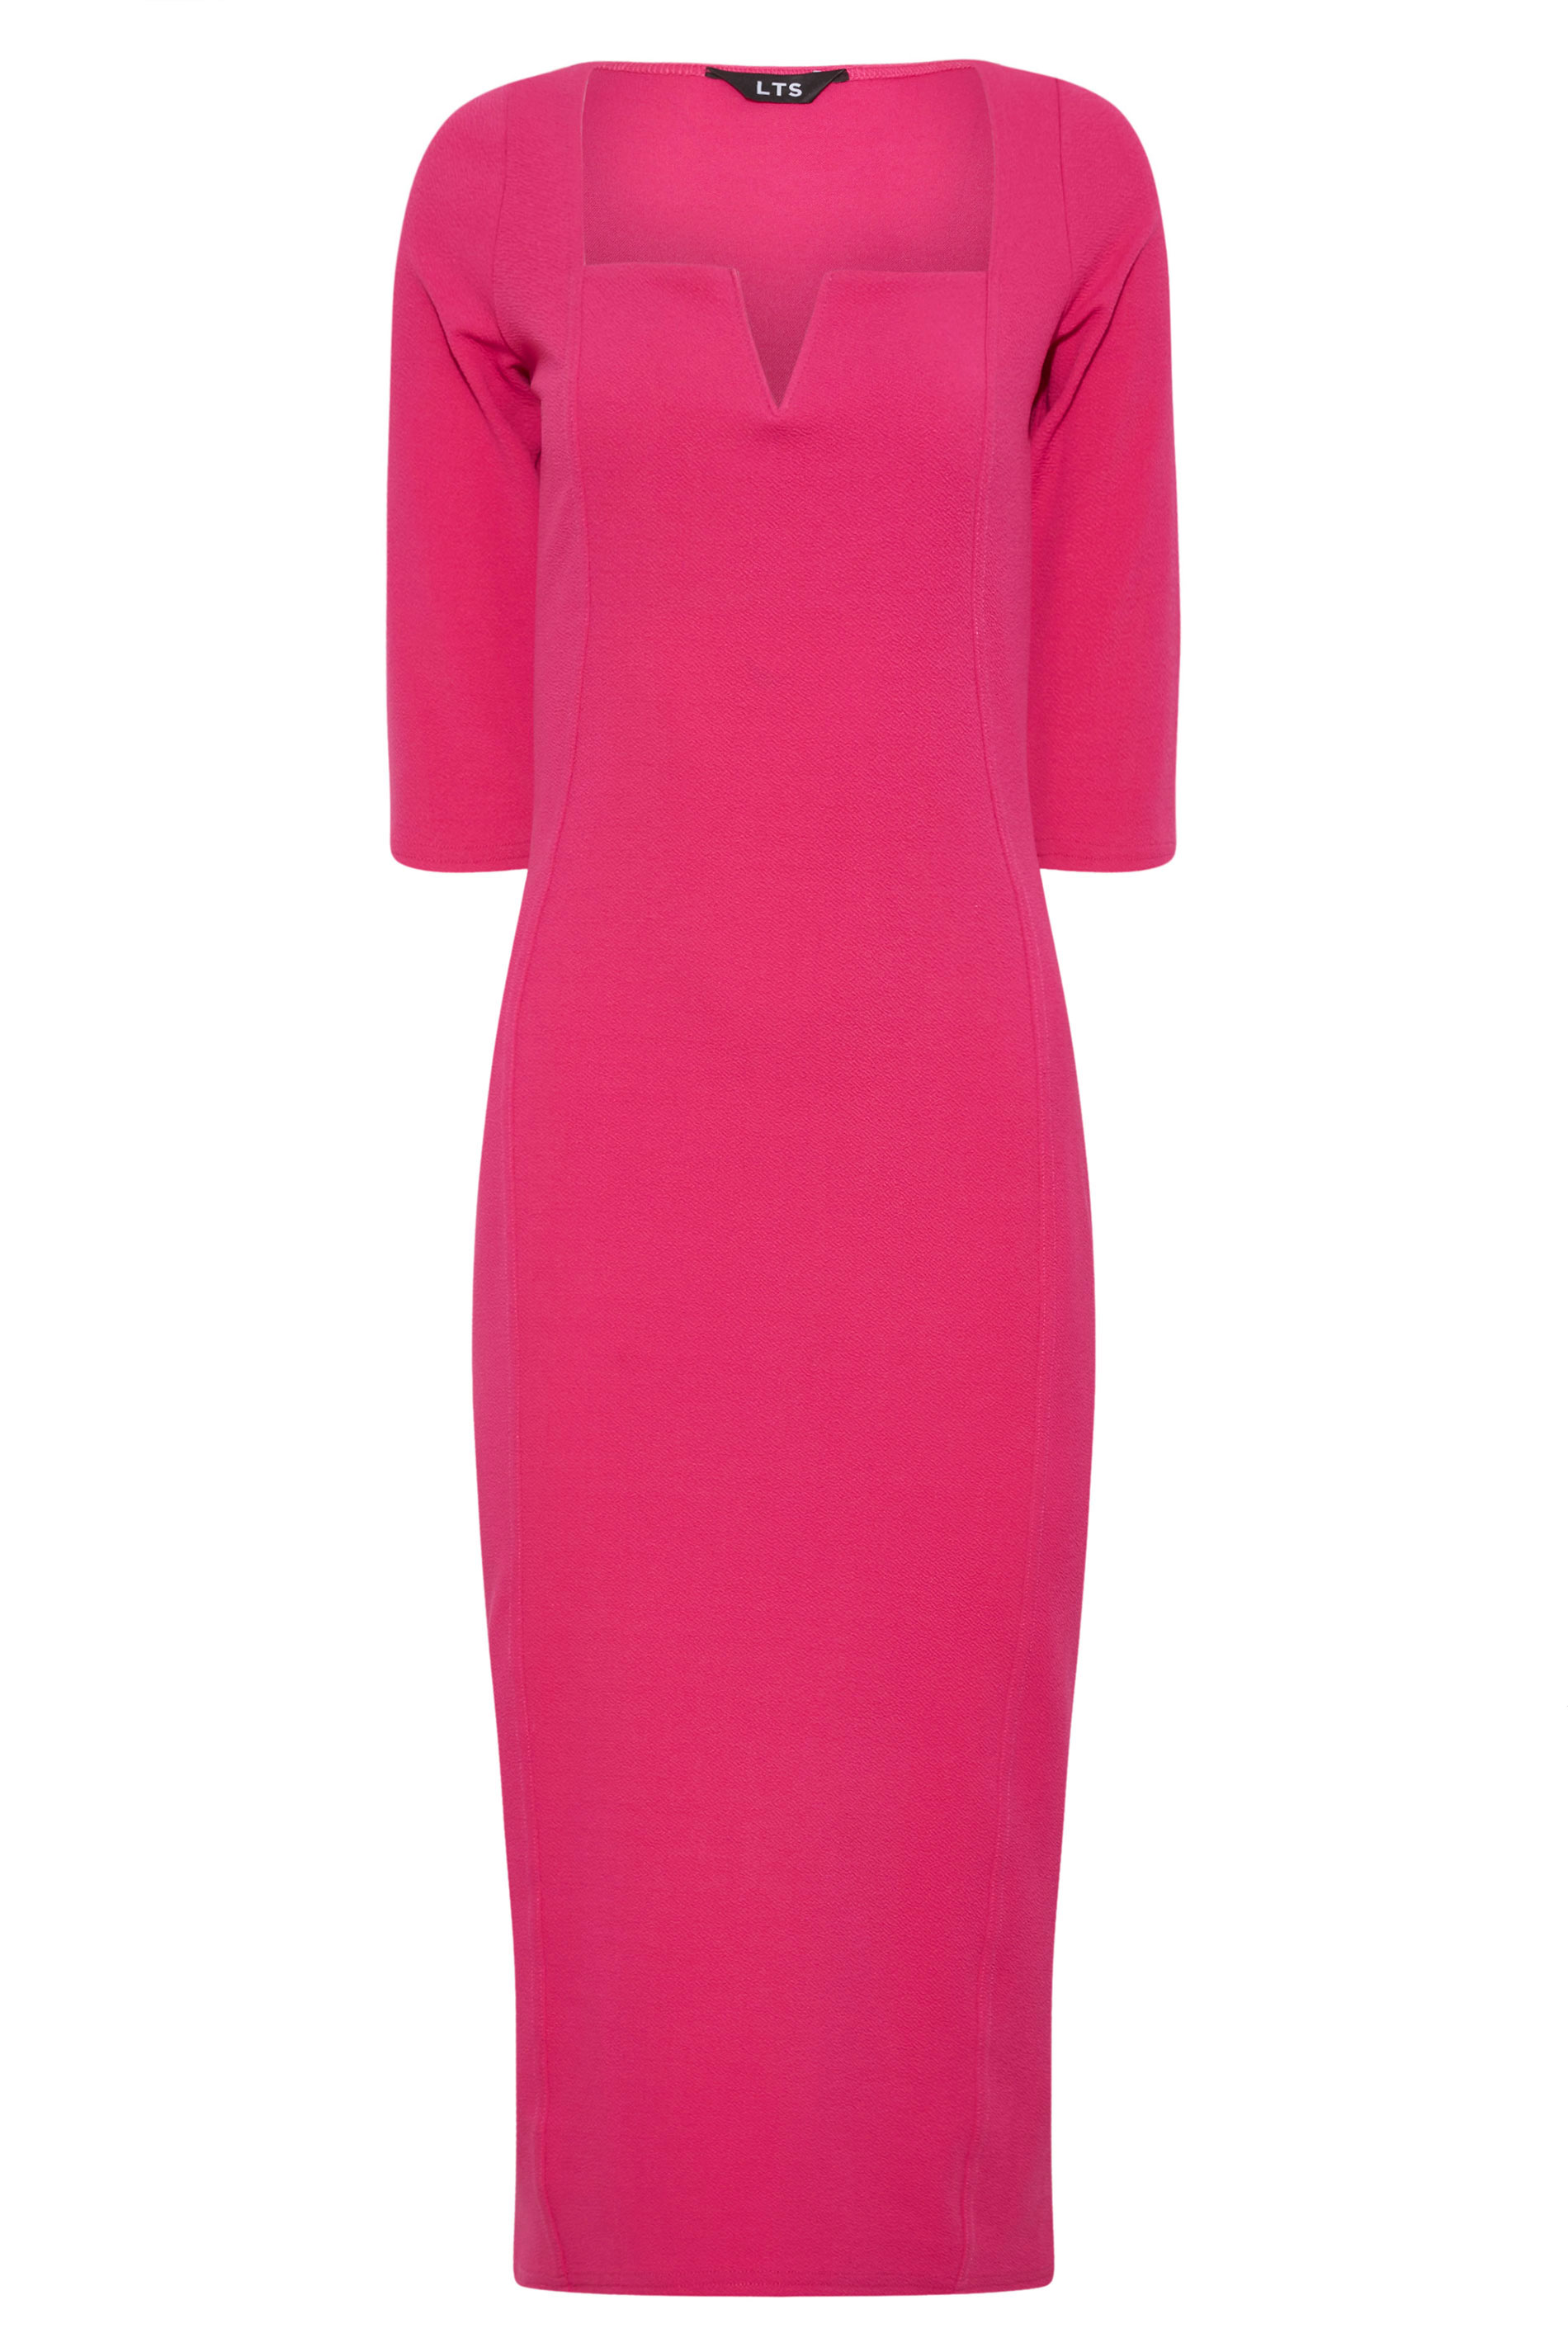 Tall Women's LTS Bright Pink Notch Neck Midi Dress | Long Tall Sally 2